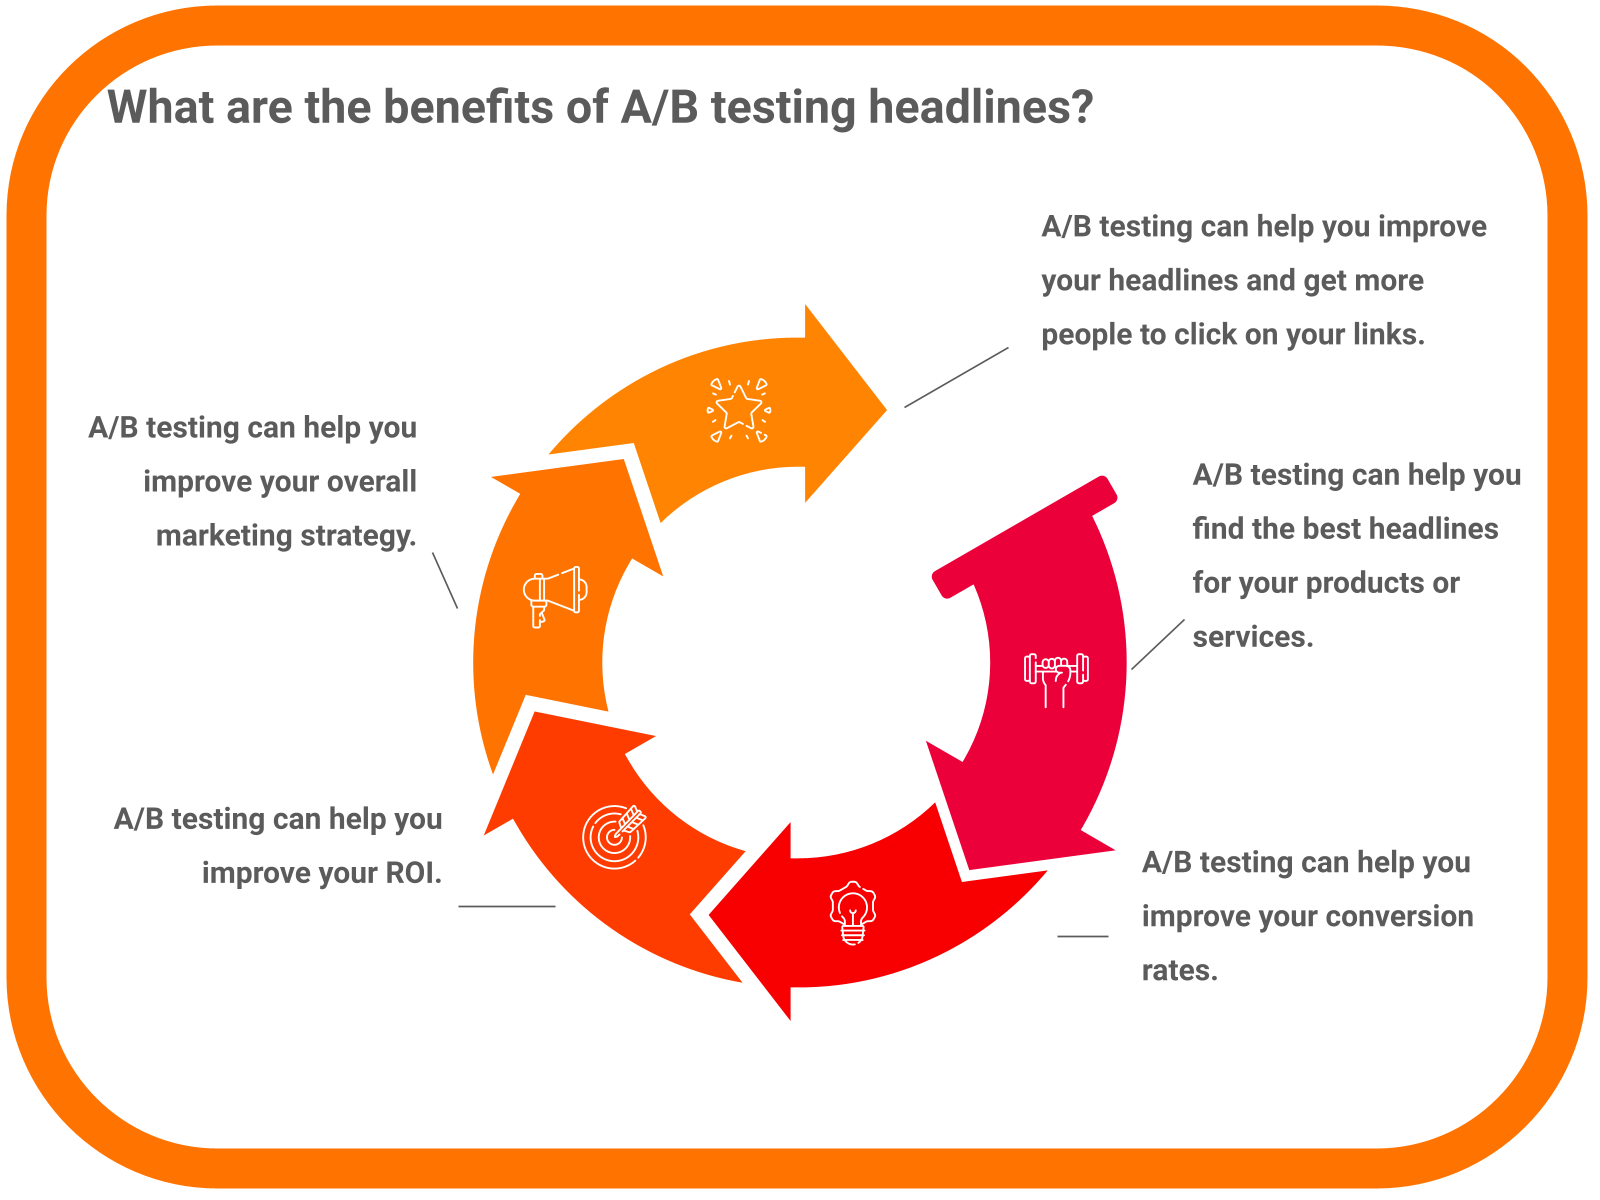 Benefits of A/B testing headlines.